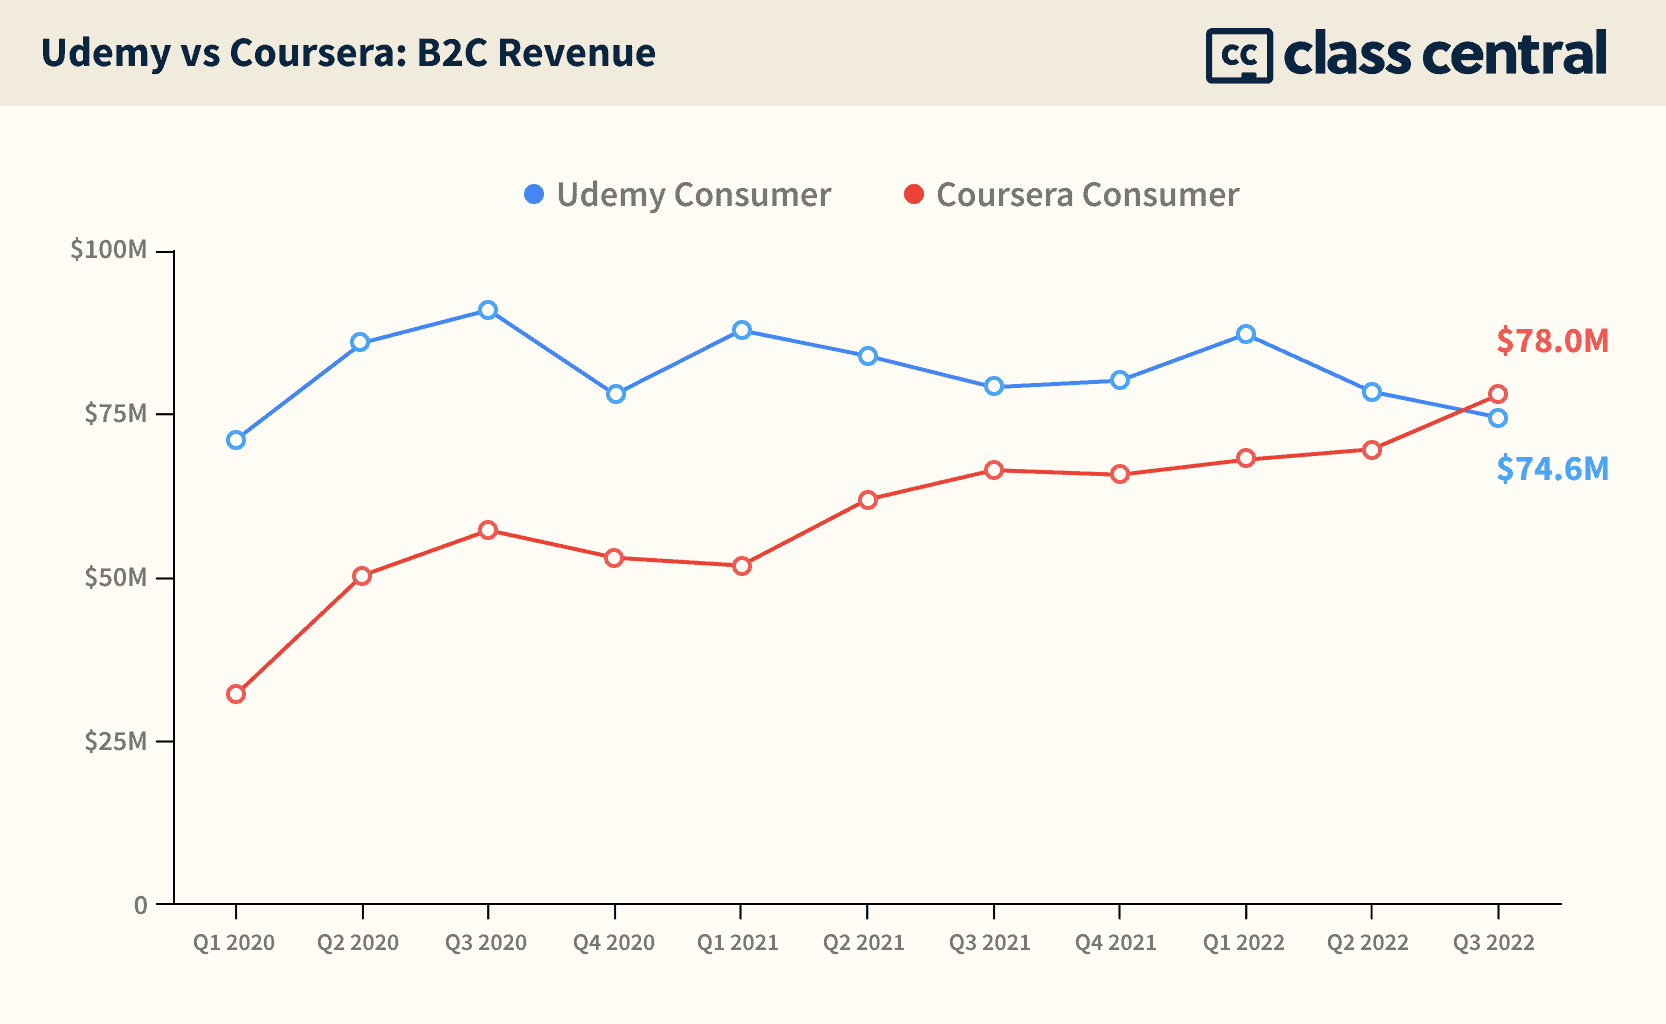 Coursera consumer revenue overtook Udemy’s in 2022